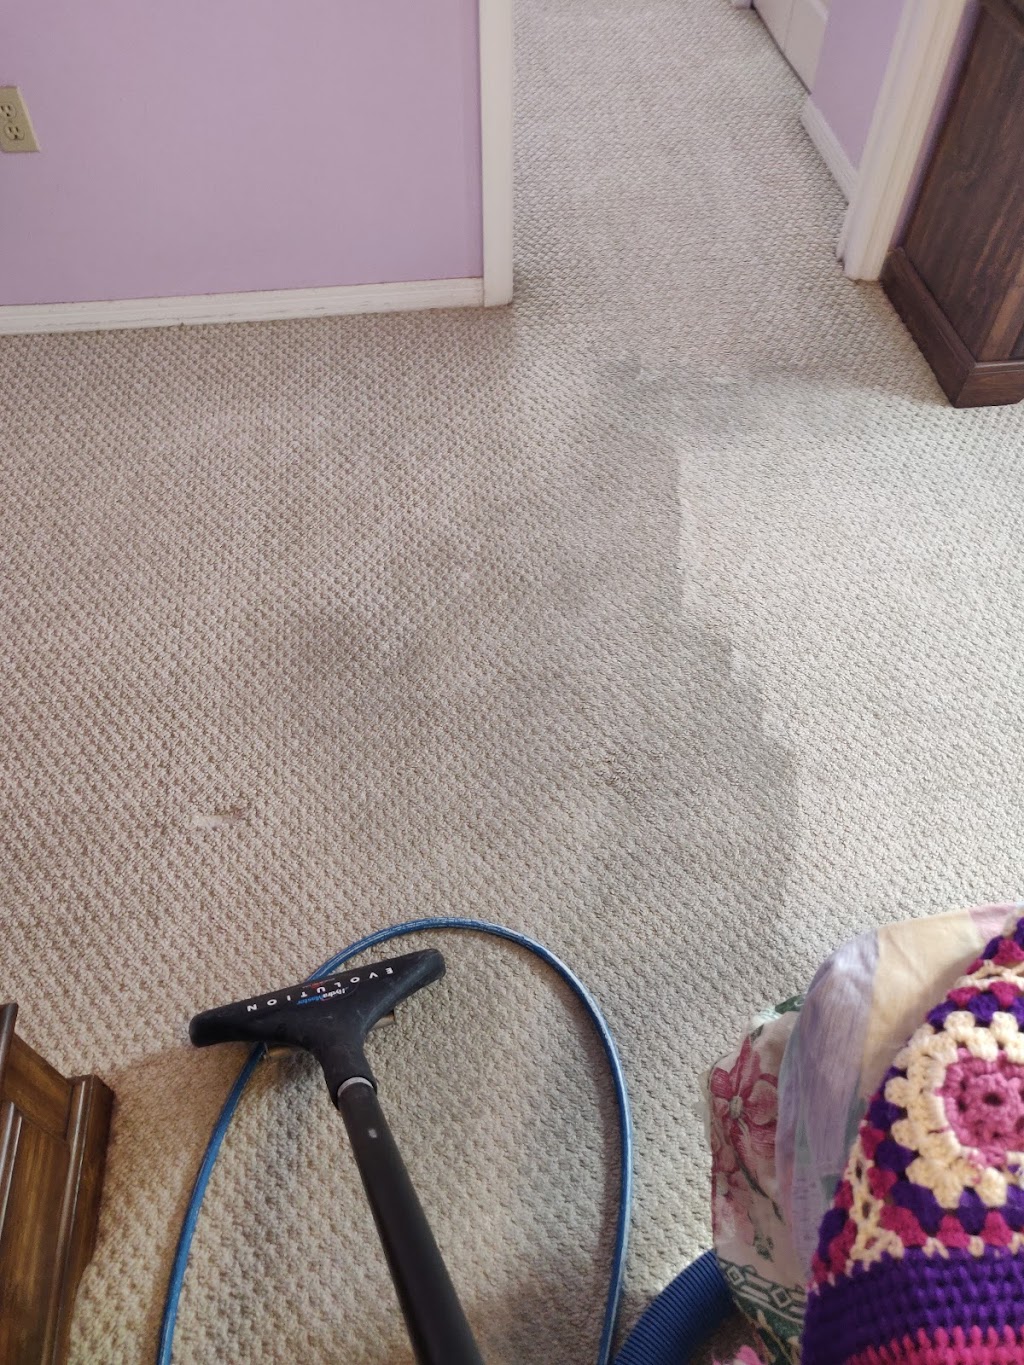 Generations Carpet Cleaning | 6633 Massachusetts Ave, New Port Richey, FL 34653, USA | Phone: (727) 379-2240